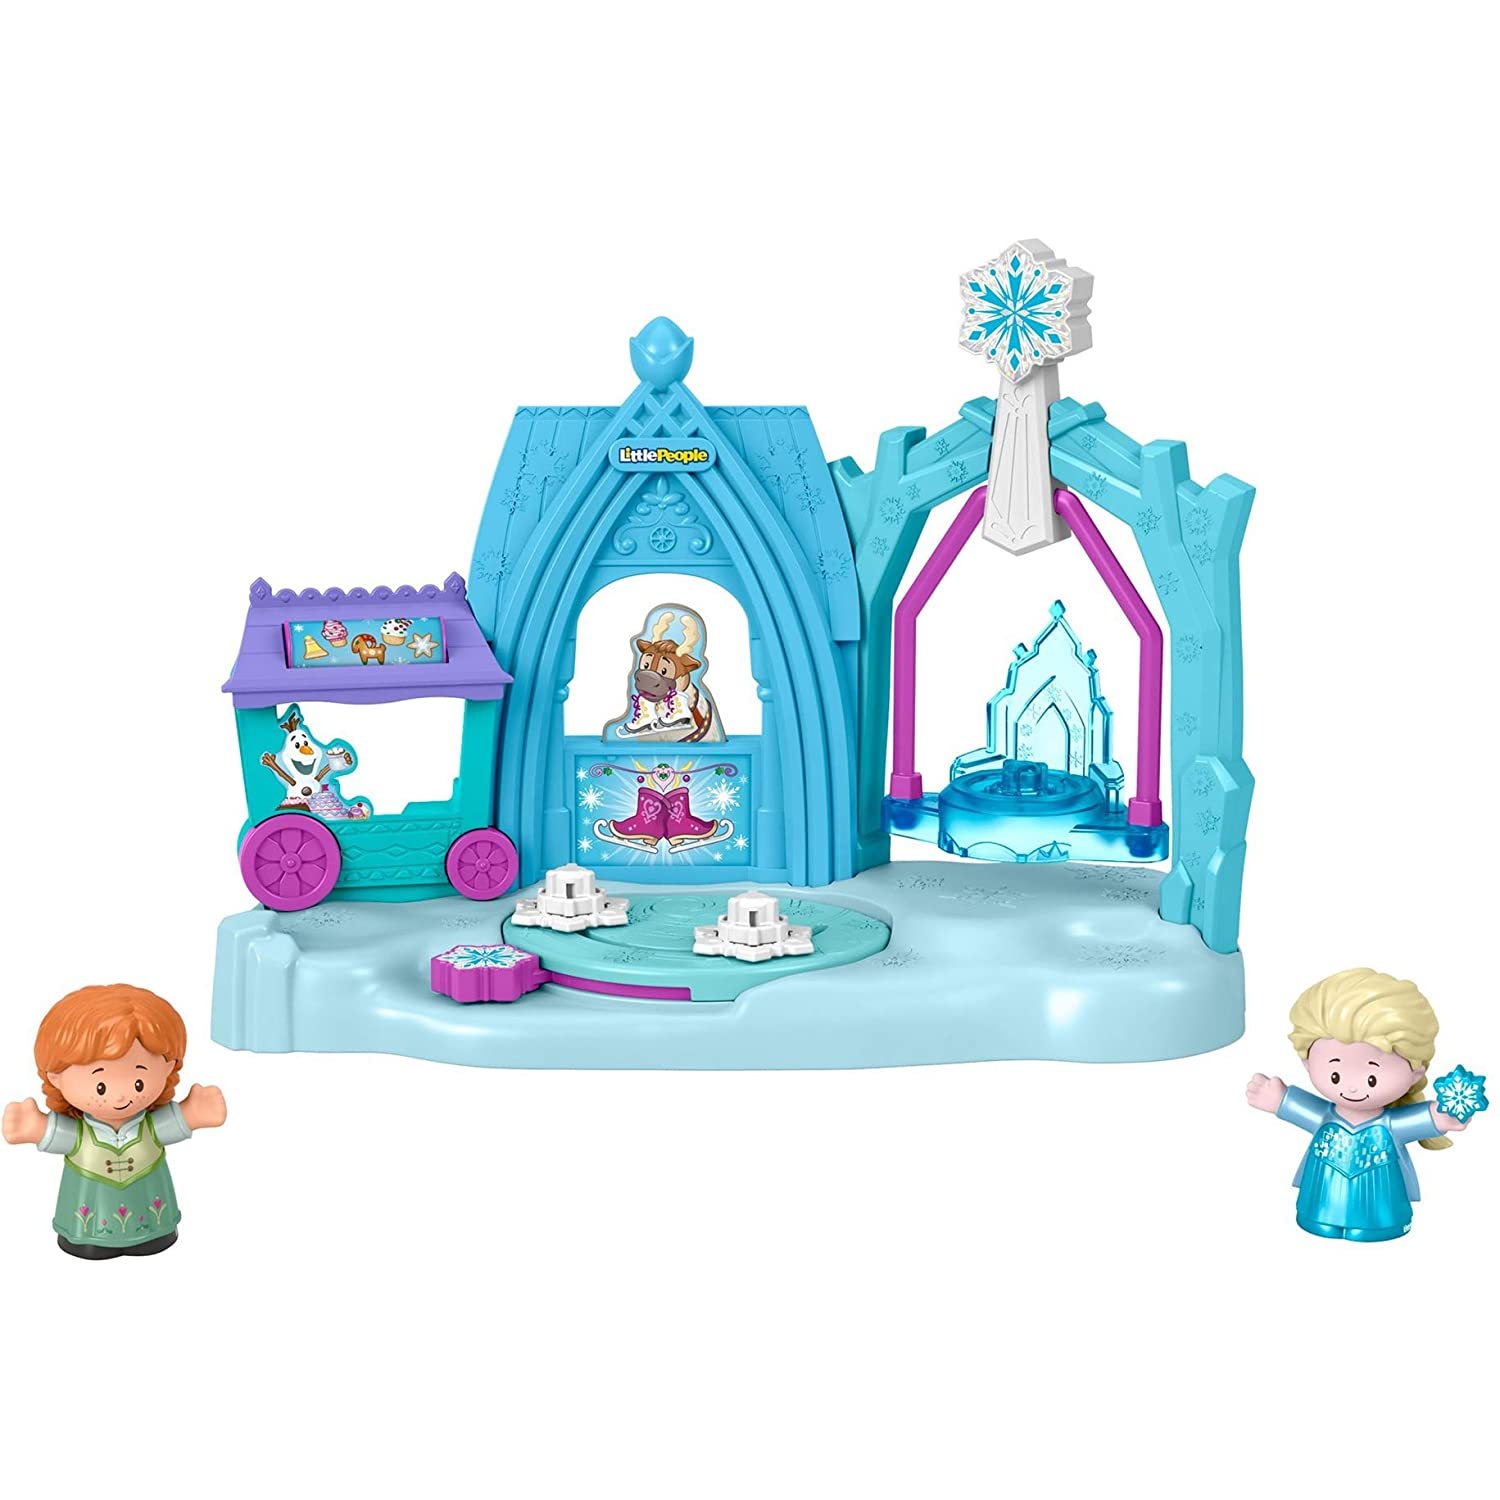 Disney Frozen Arendelle Winter Wonderland by Little People, ice skating playset  - $45.99